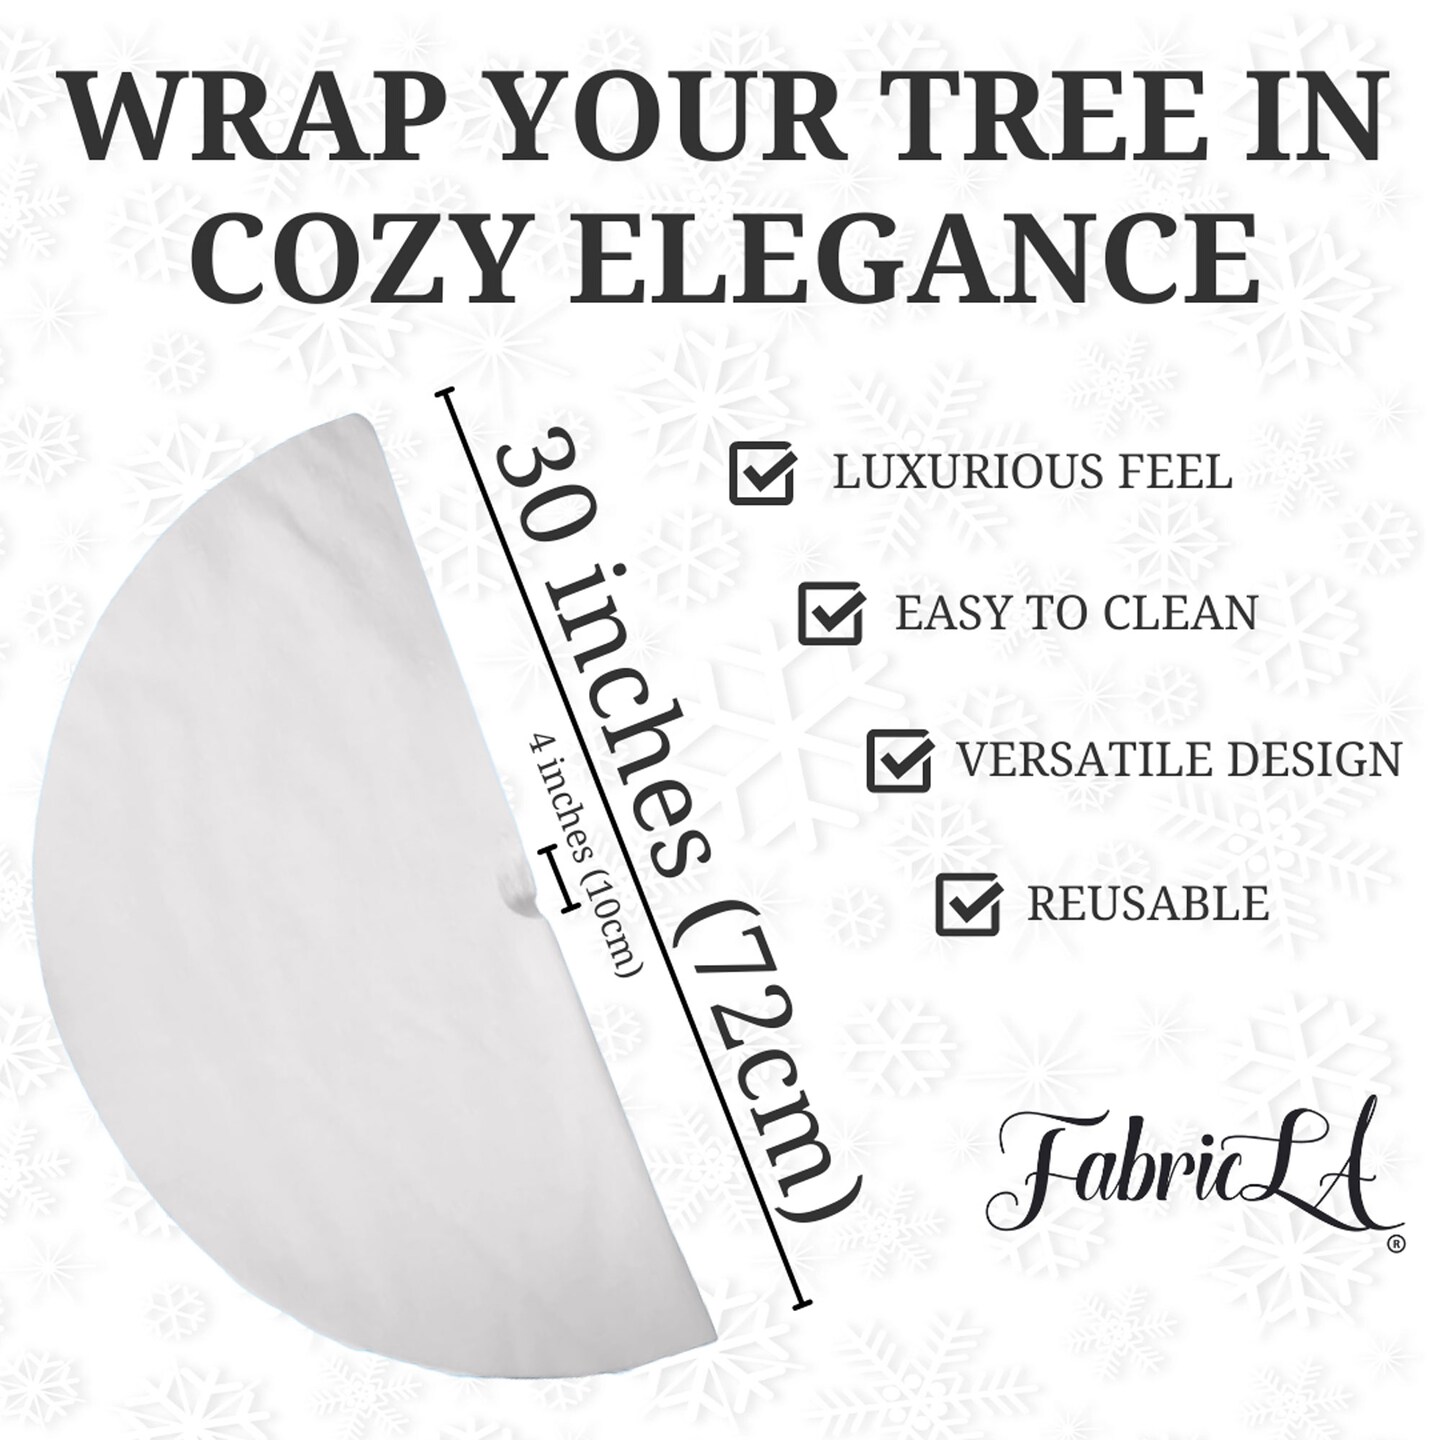 30&#x22; White Faux Fur Christmas Tree Skirt - Fluffy Plush Tree Skirt (72cm) for Holiday Decorations (FabricLA)